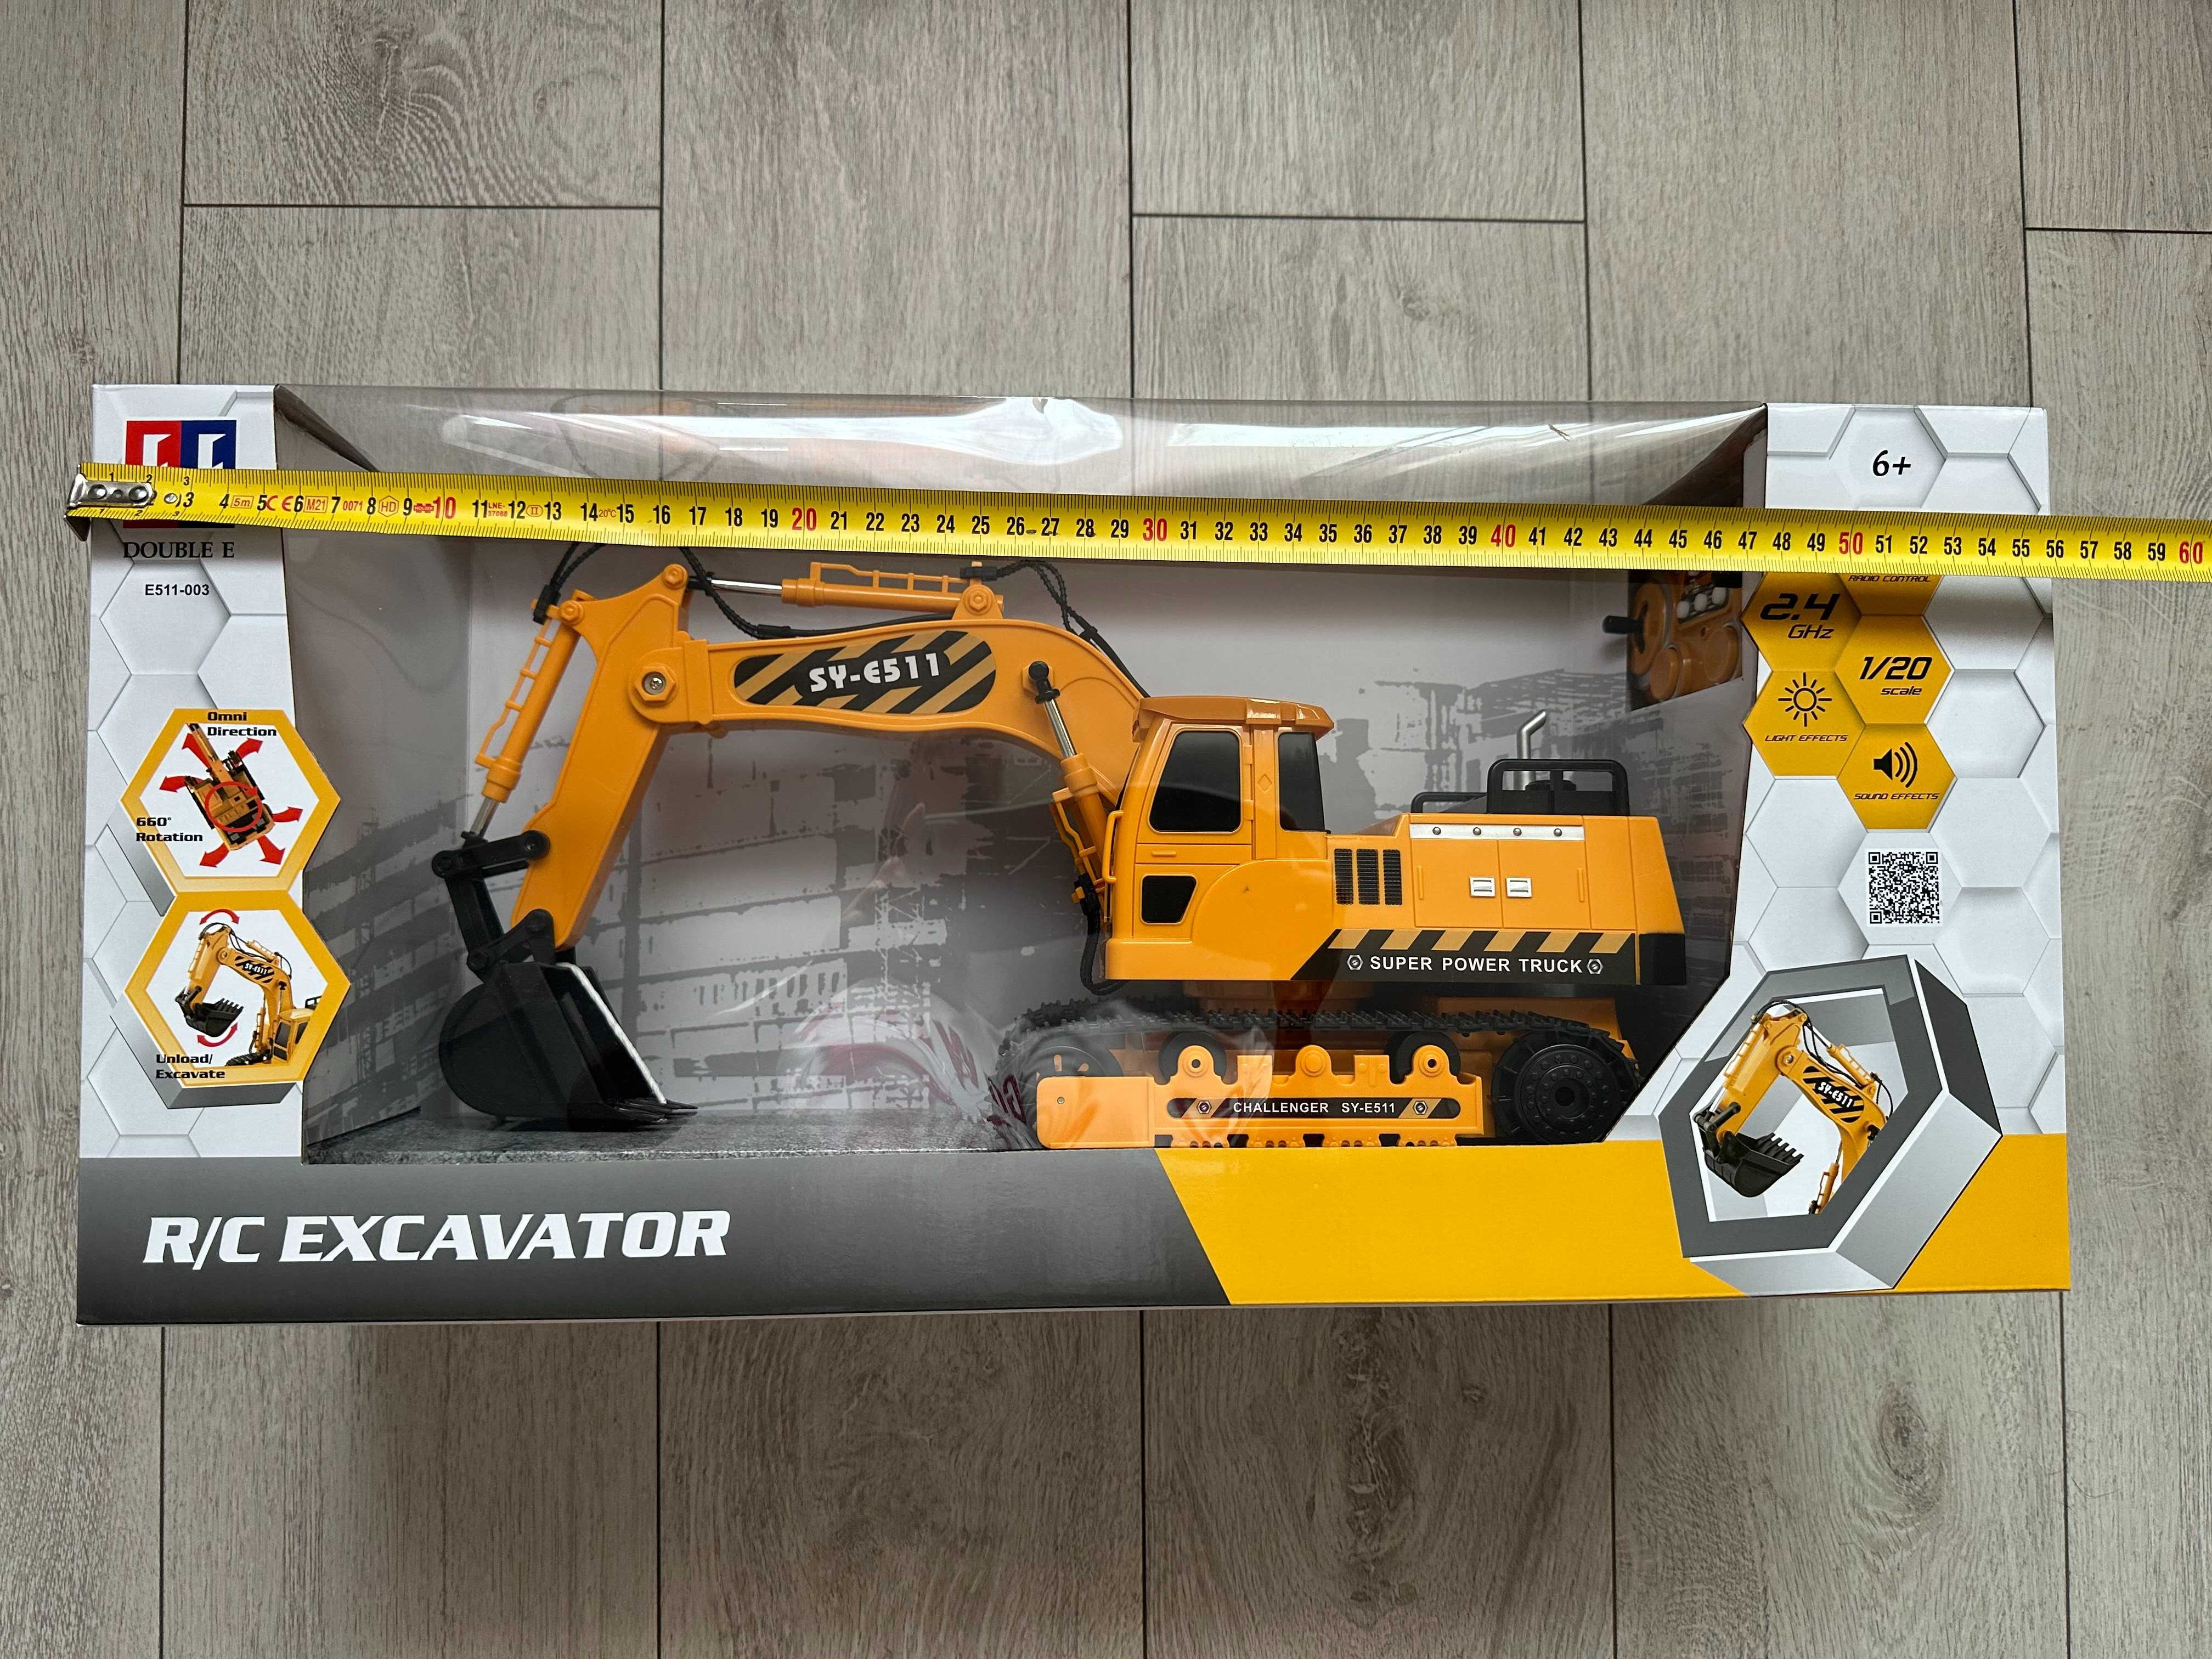 Excavator RC Double Eagle E511 1:20